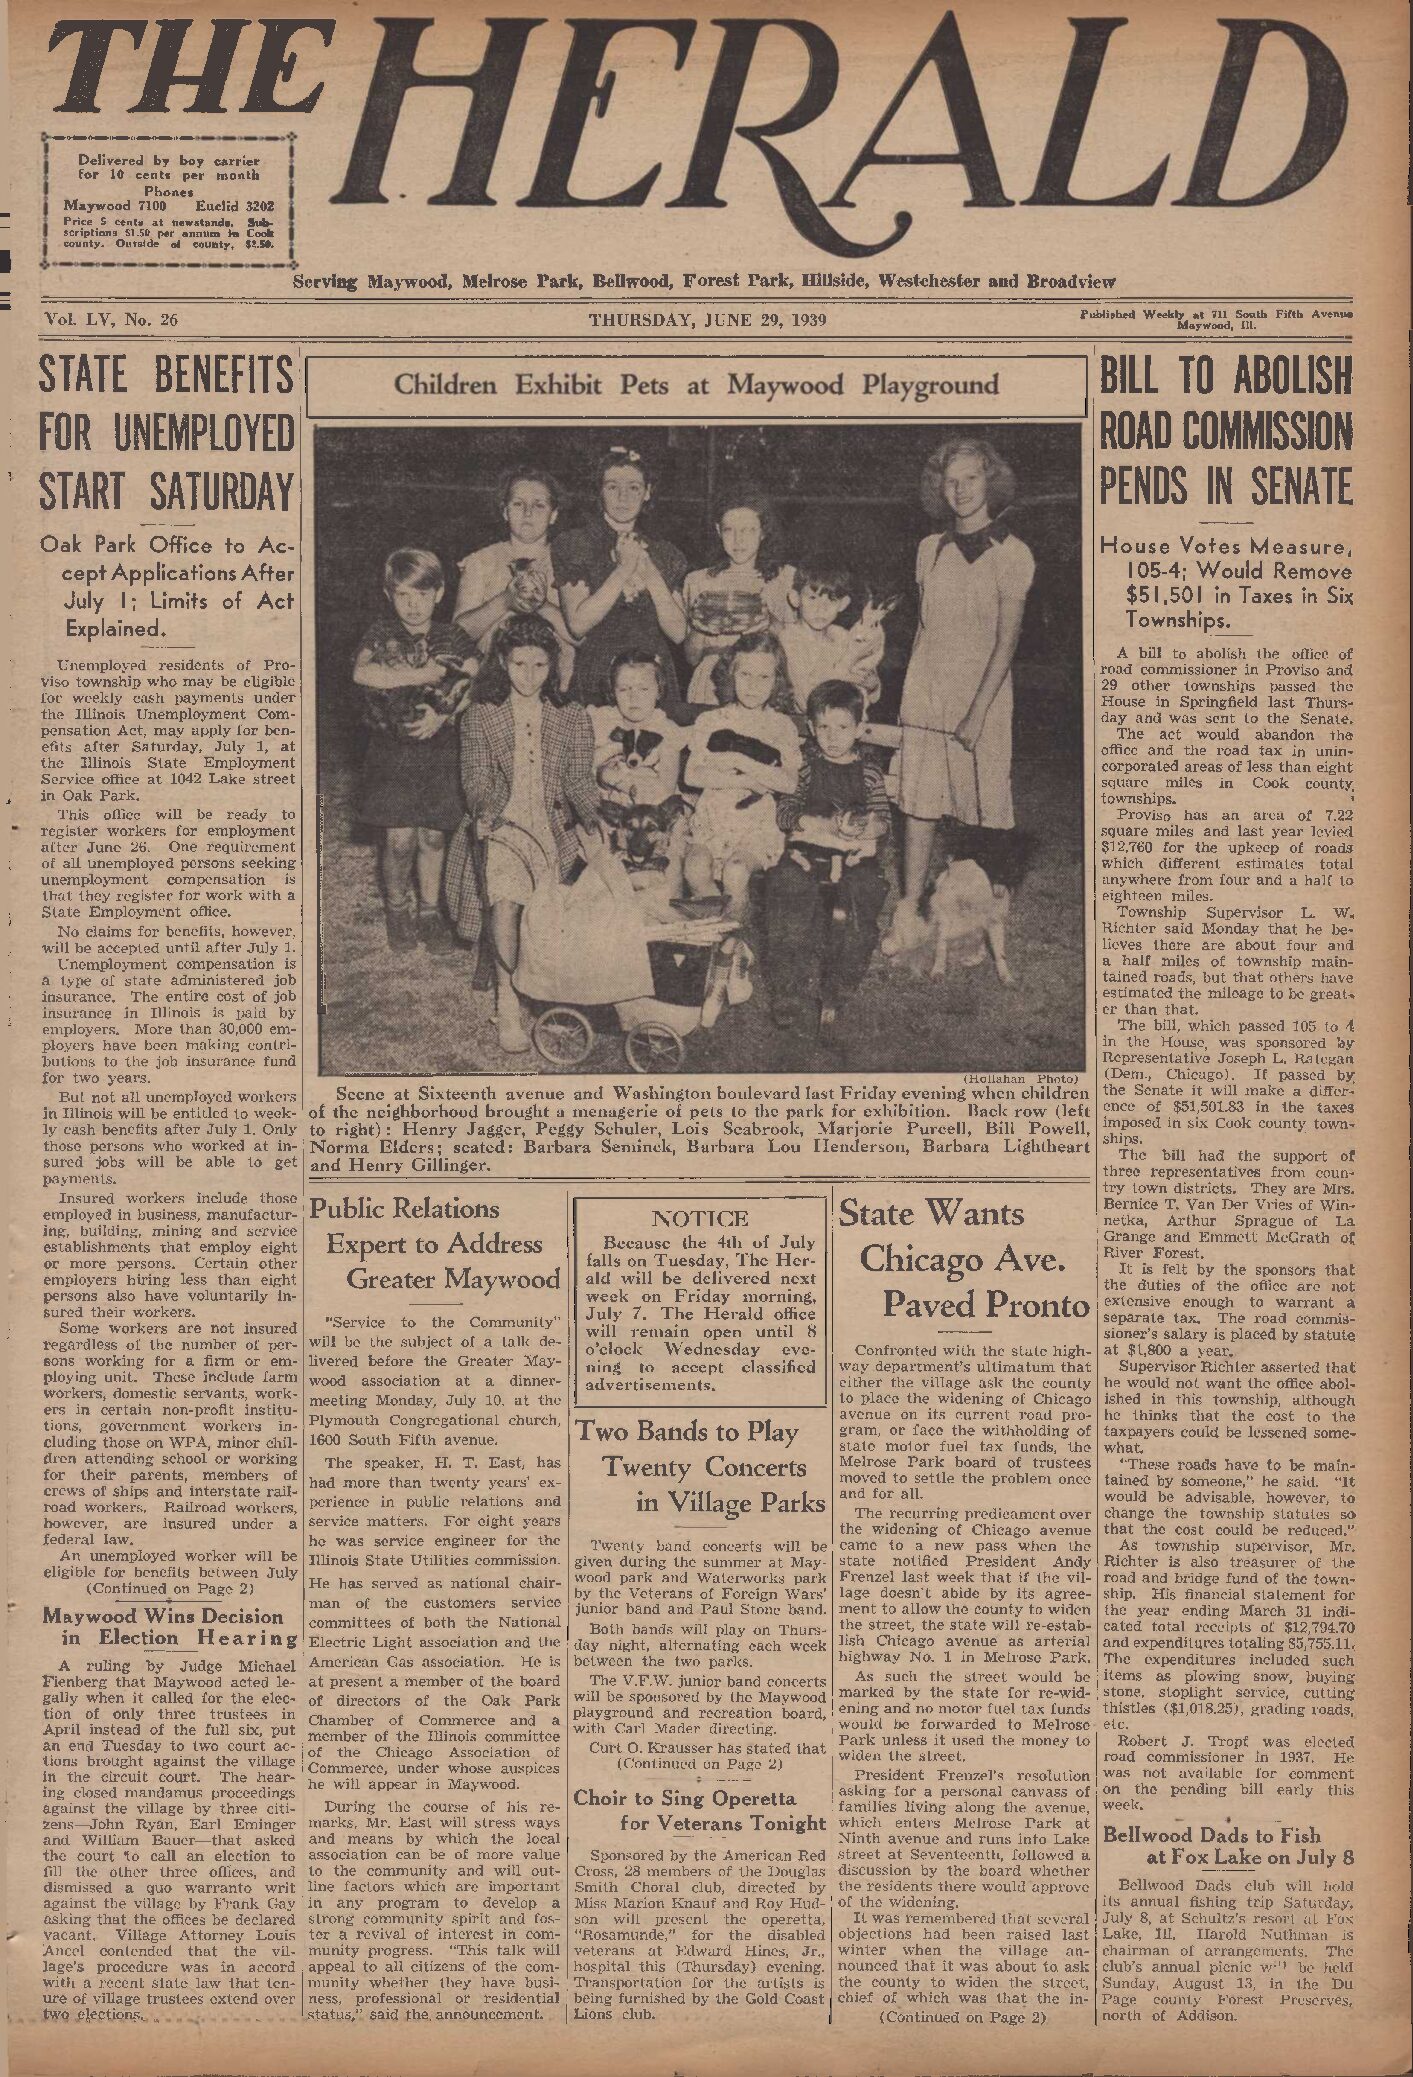 The Herald – 19390629